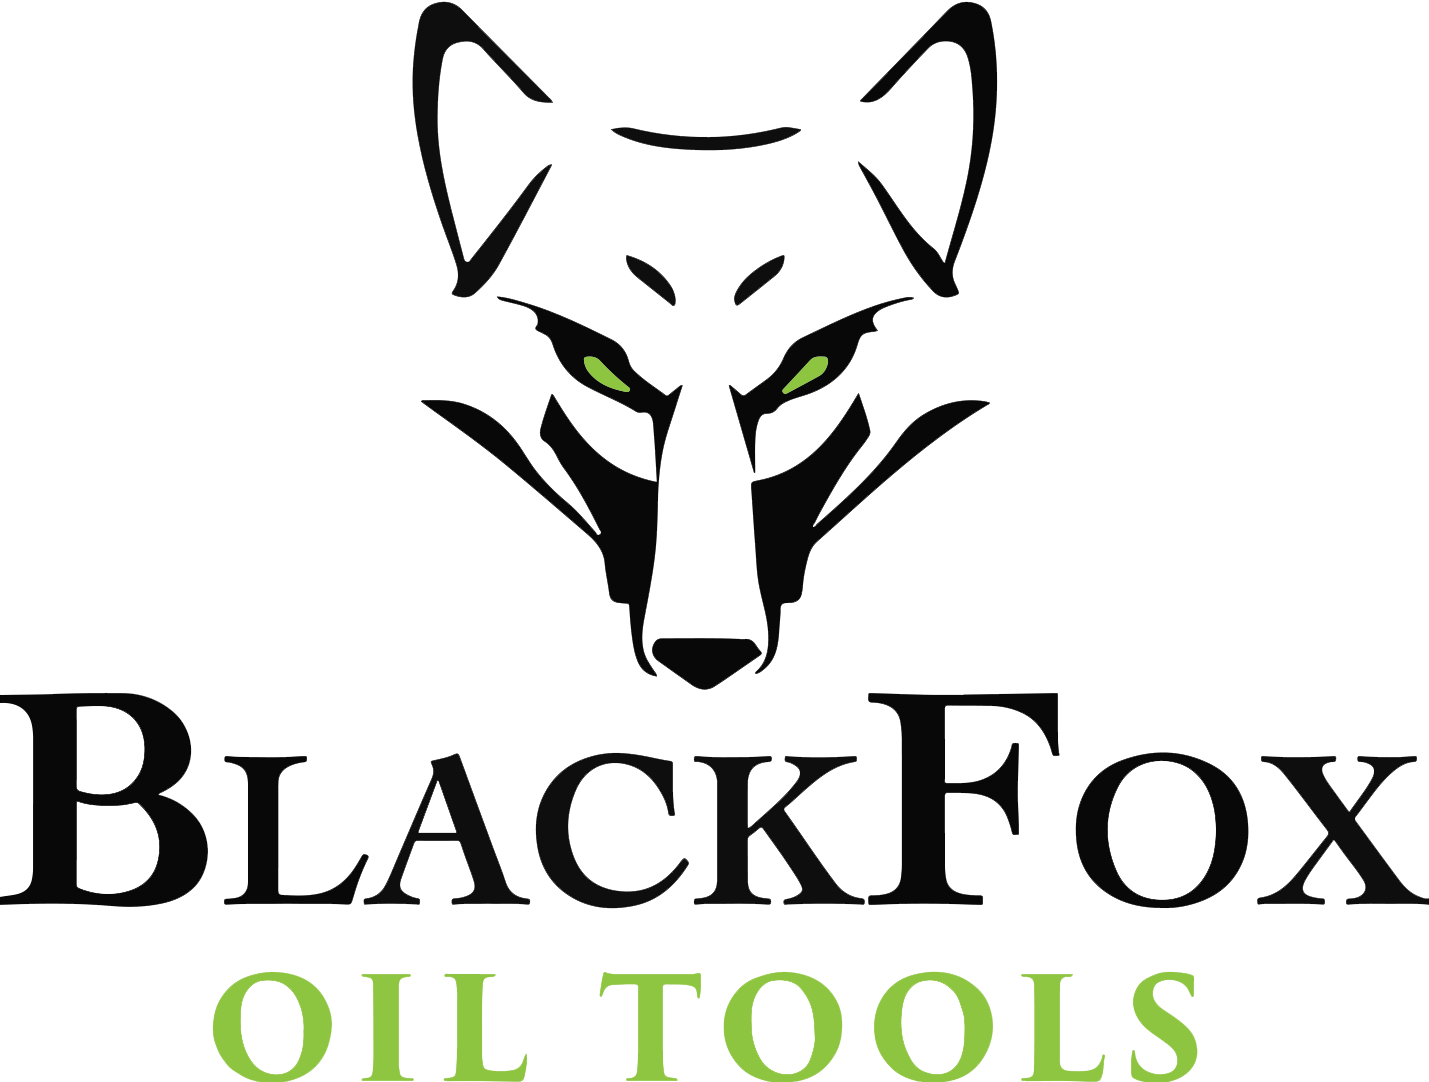 BlackFox Oil Tools, LLC